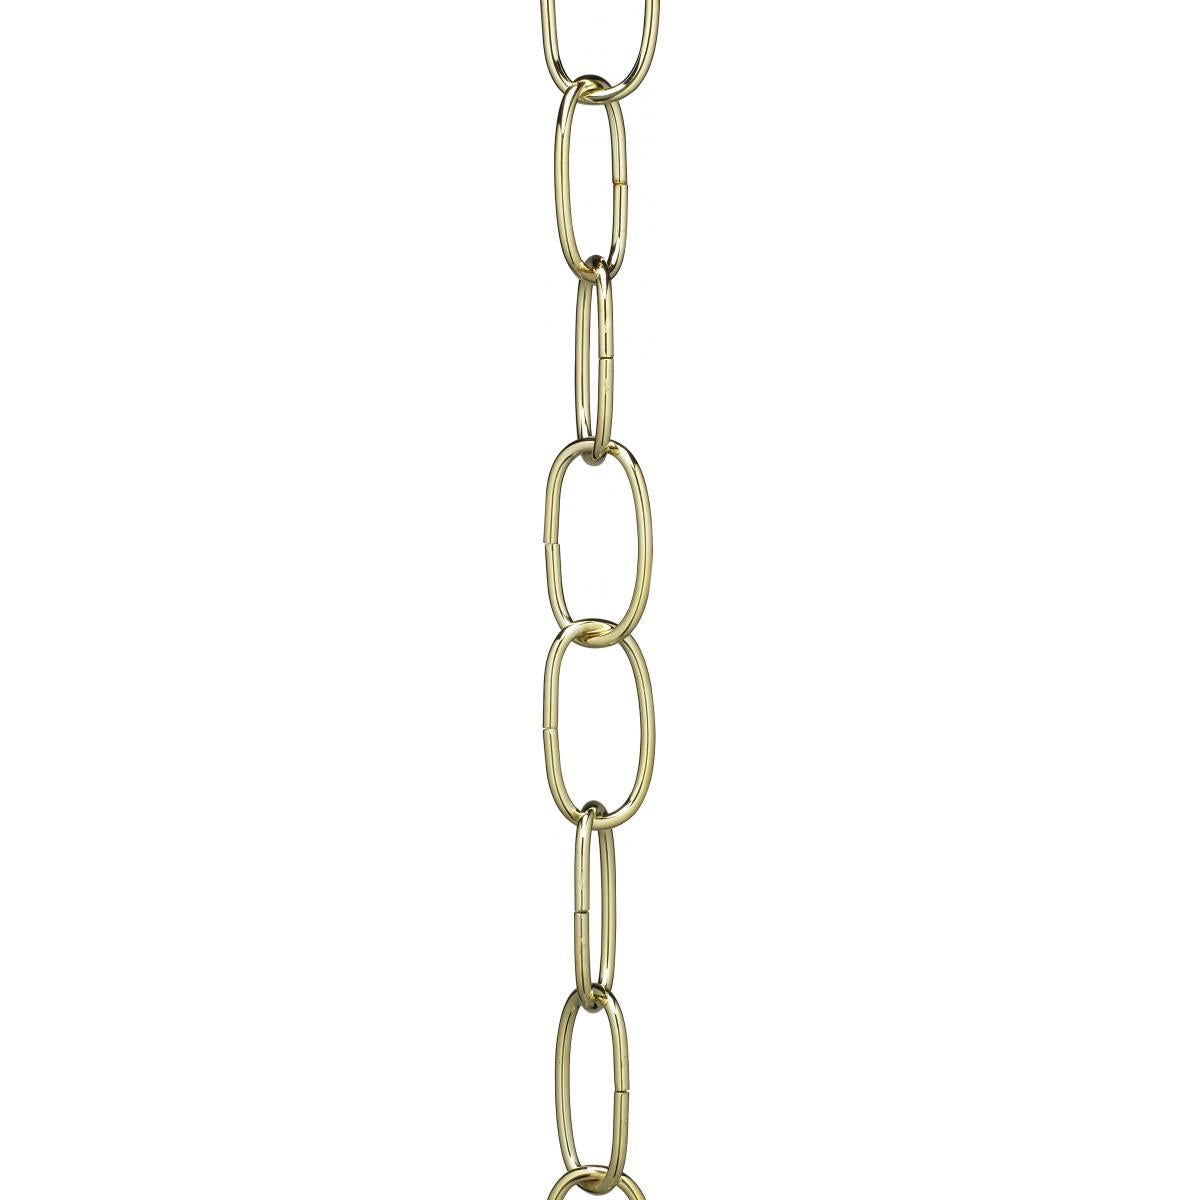 Satco 90-070 11 Gauge Chain Brass Finish 1-1/2" Link Length 7/8" Link Width 3/32" Thick 1 Yard Length 200 Yards/Carton 15lbs Max